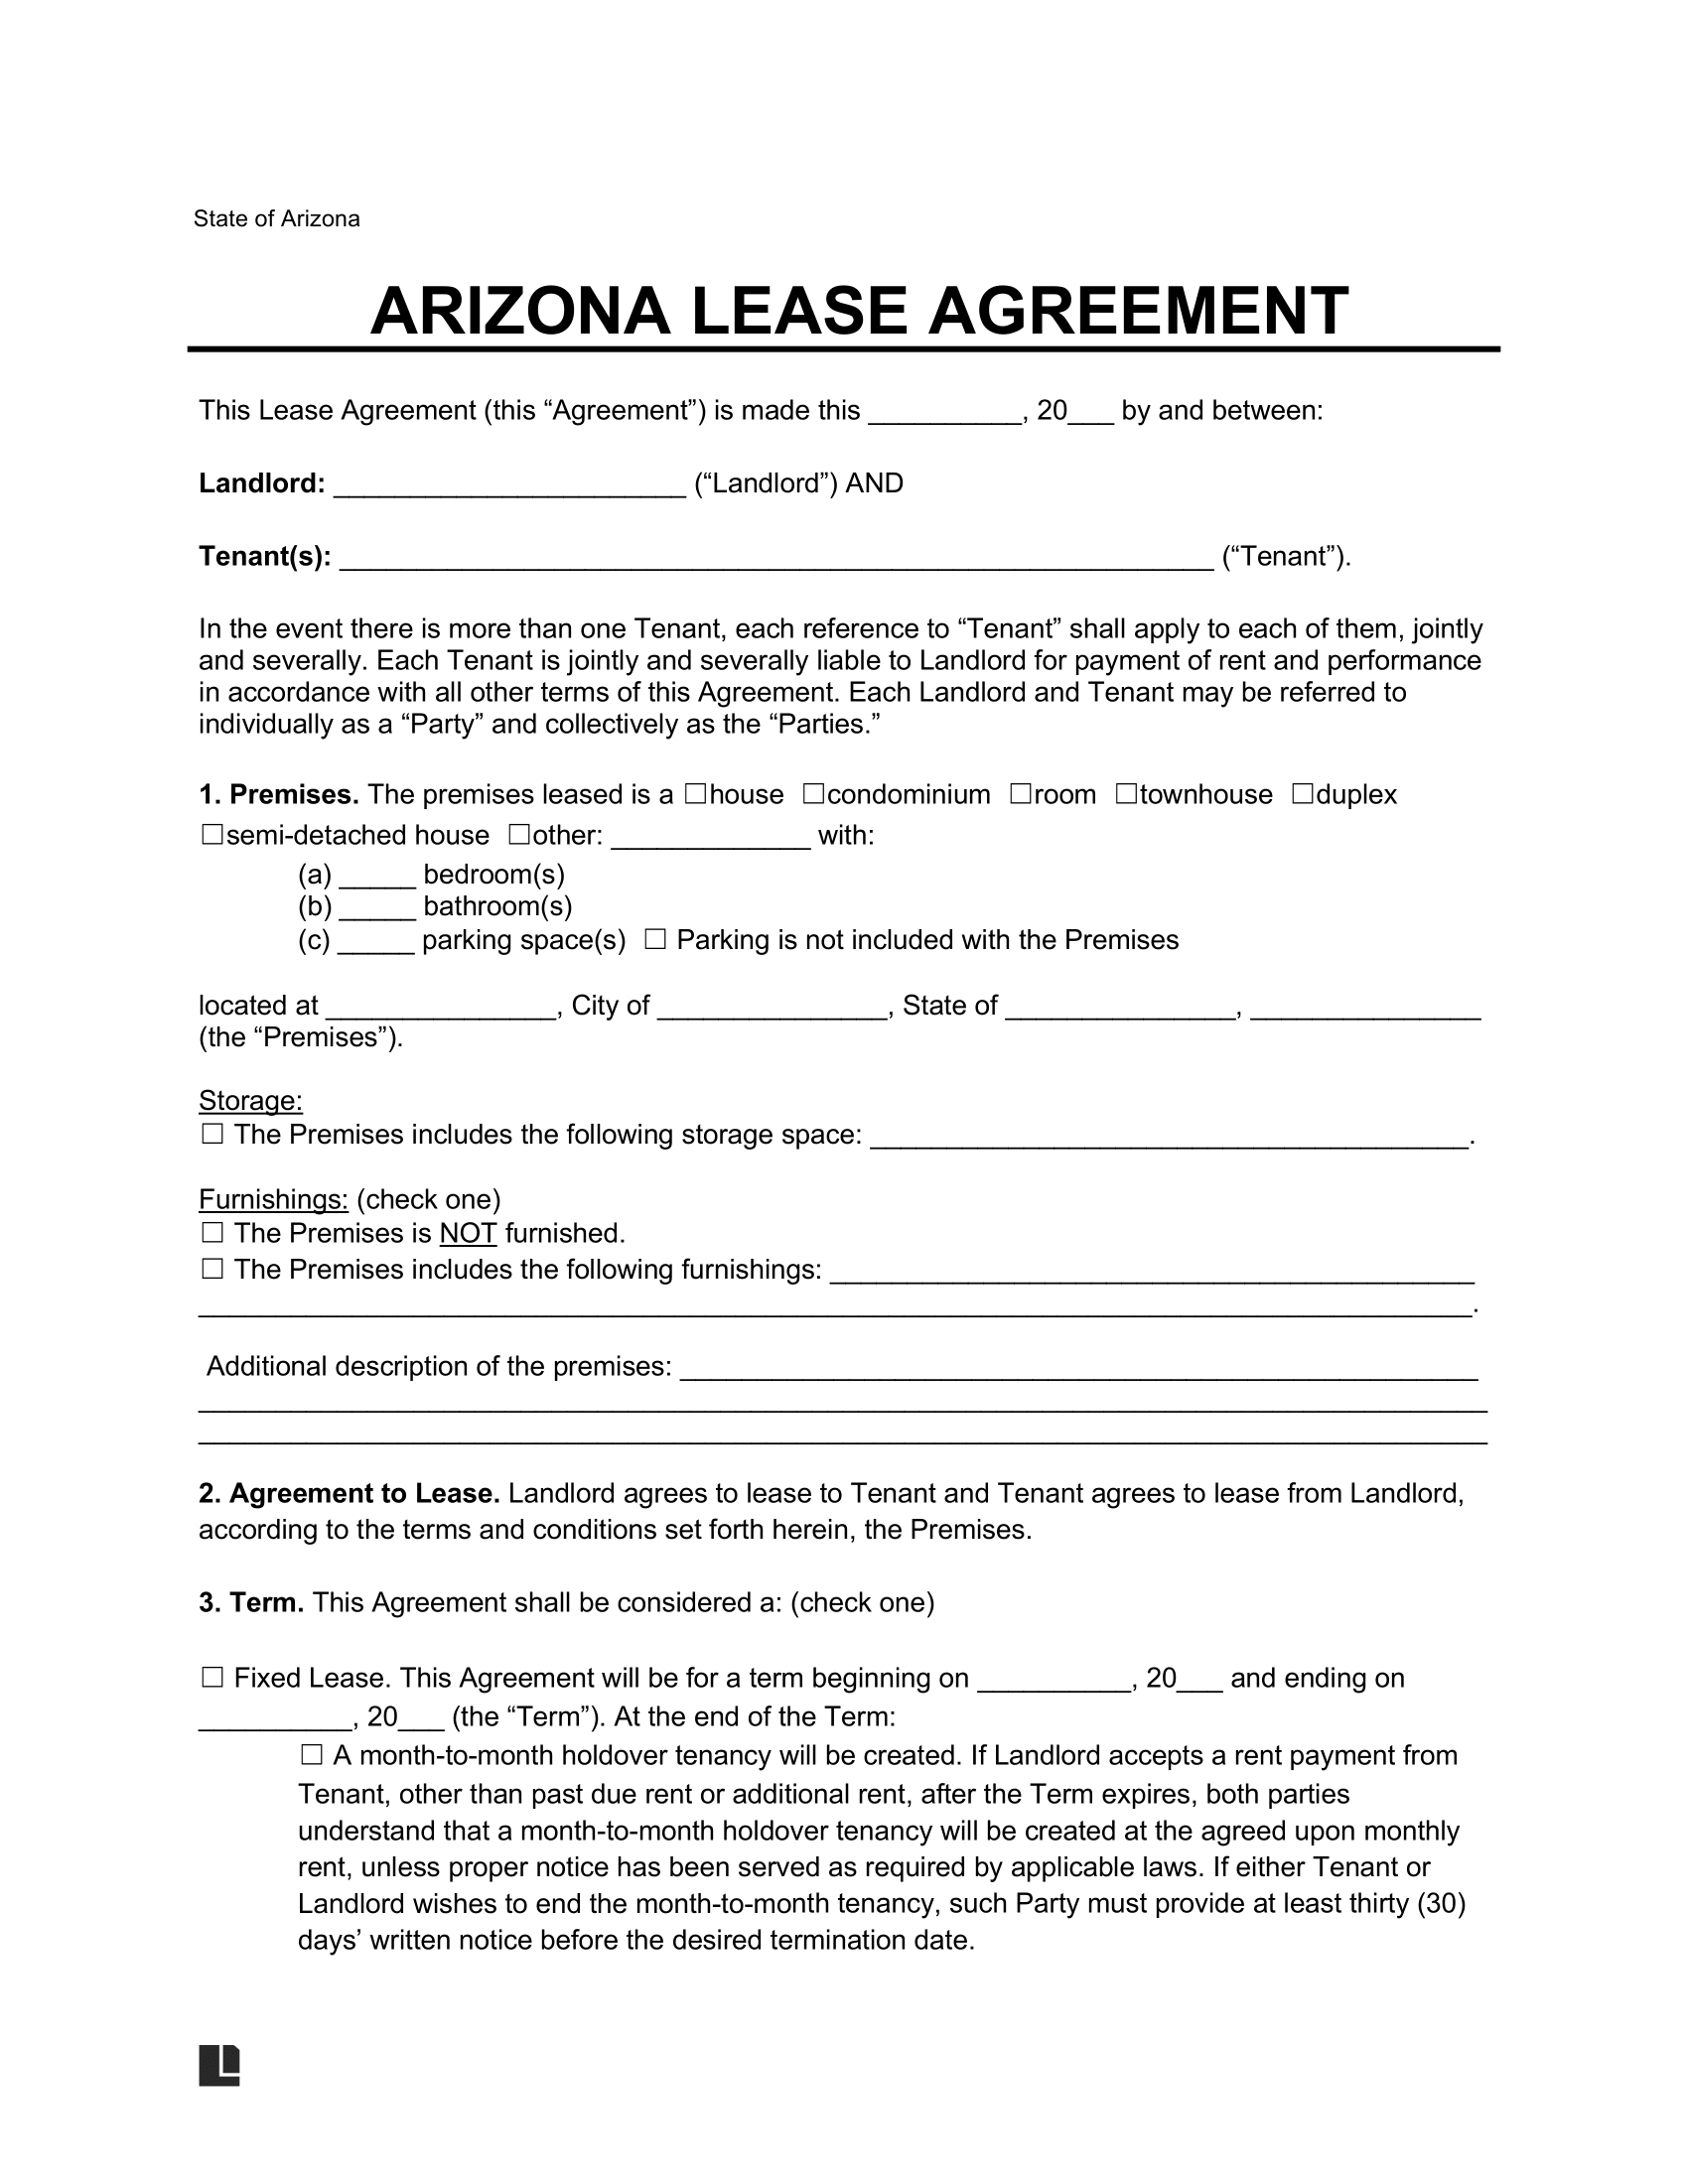 arizona residential lease agreement